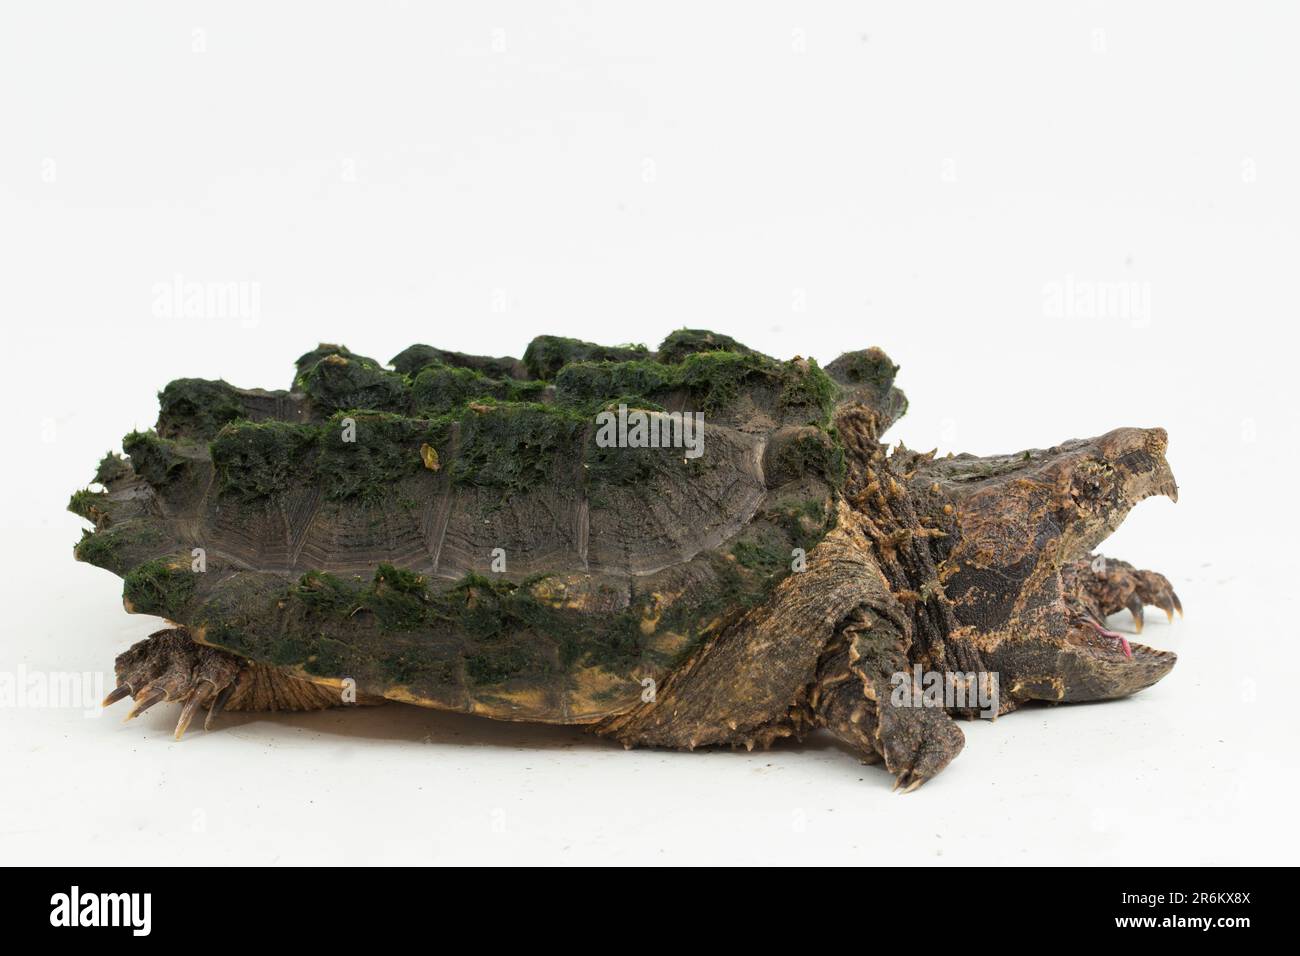 The alligator snapping turtle (Macrochelys temminckii) isolated on white background Stock Photo